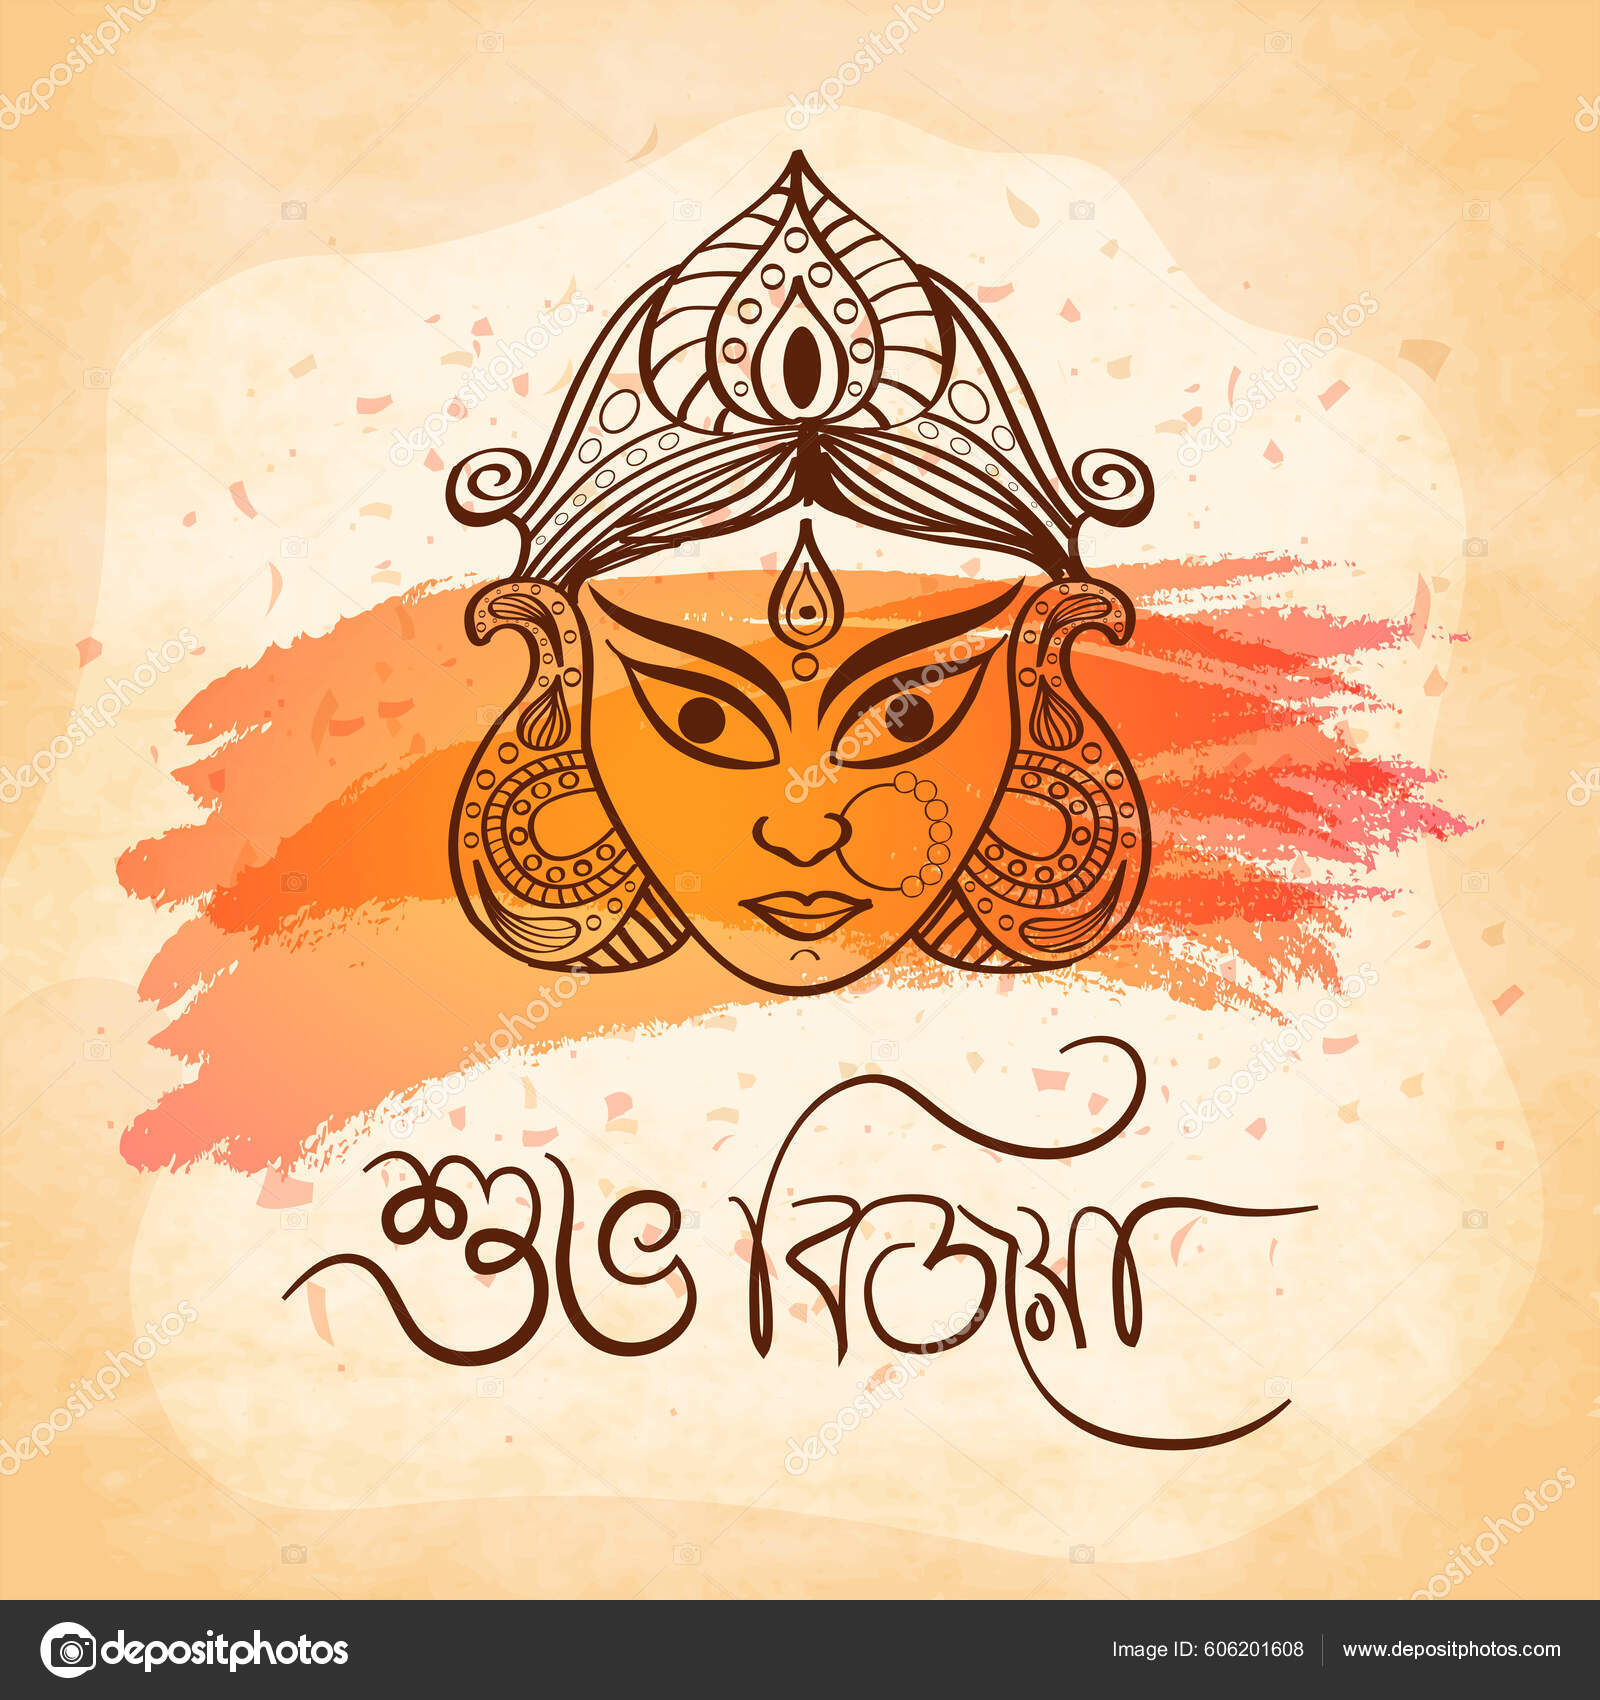 depositphotos 606201608 stock illustration bengali lettering subho bijoya creative